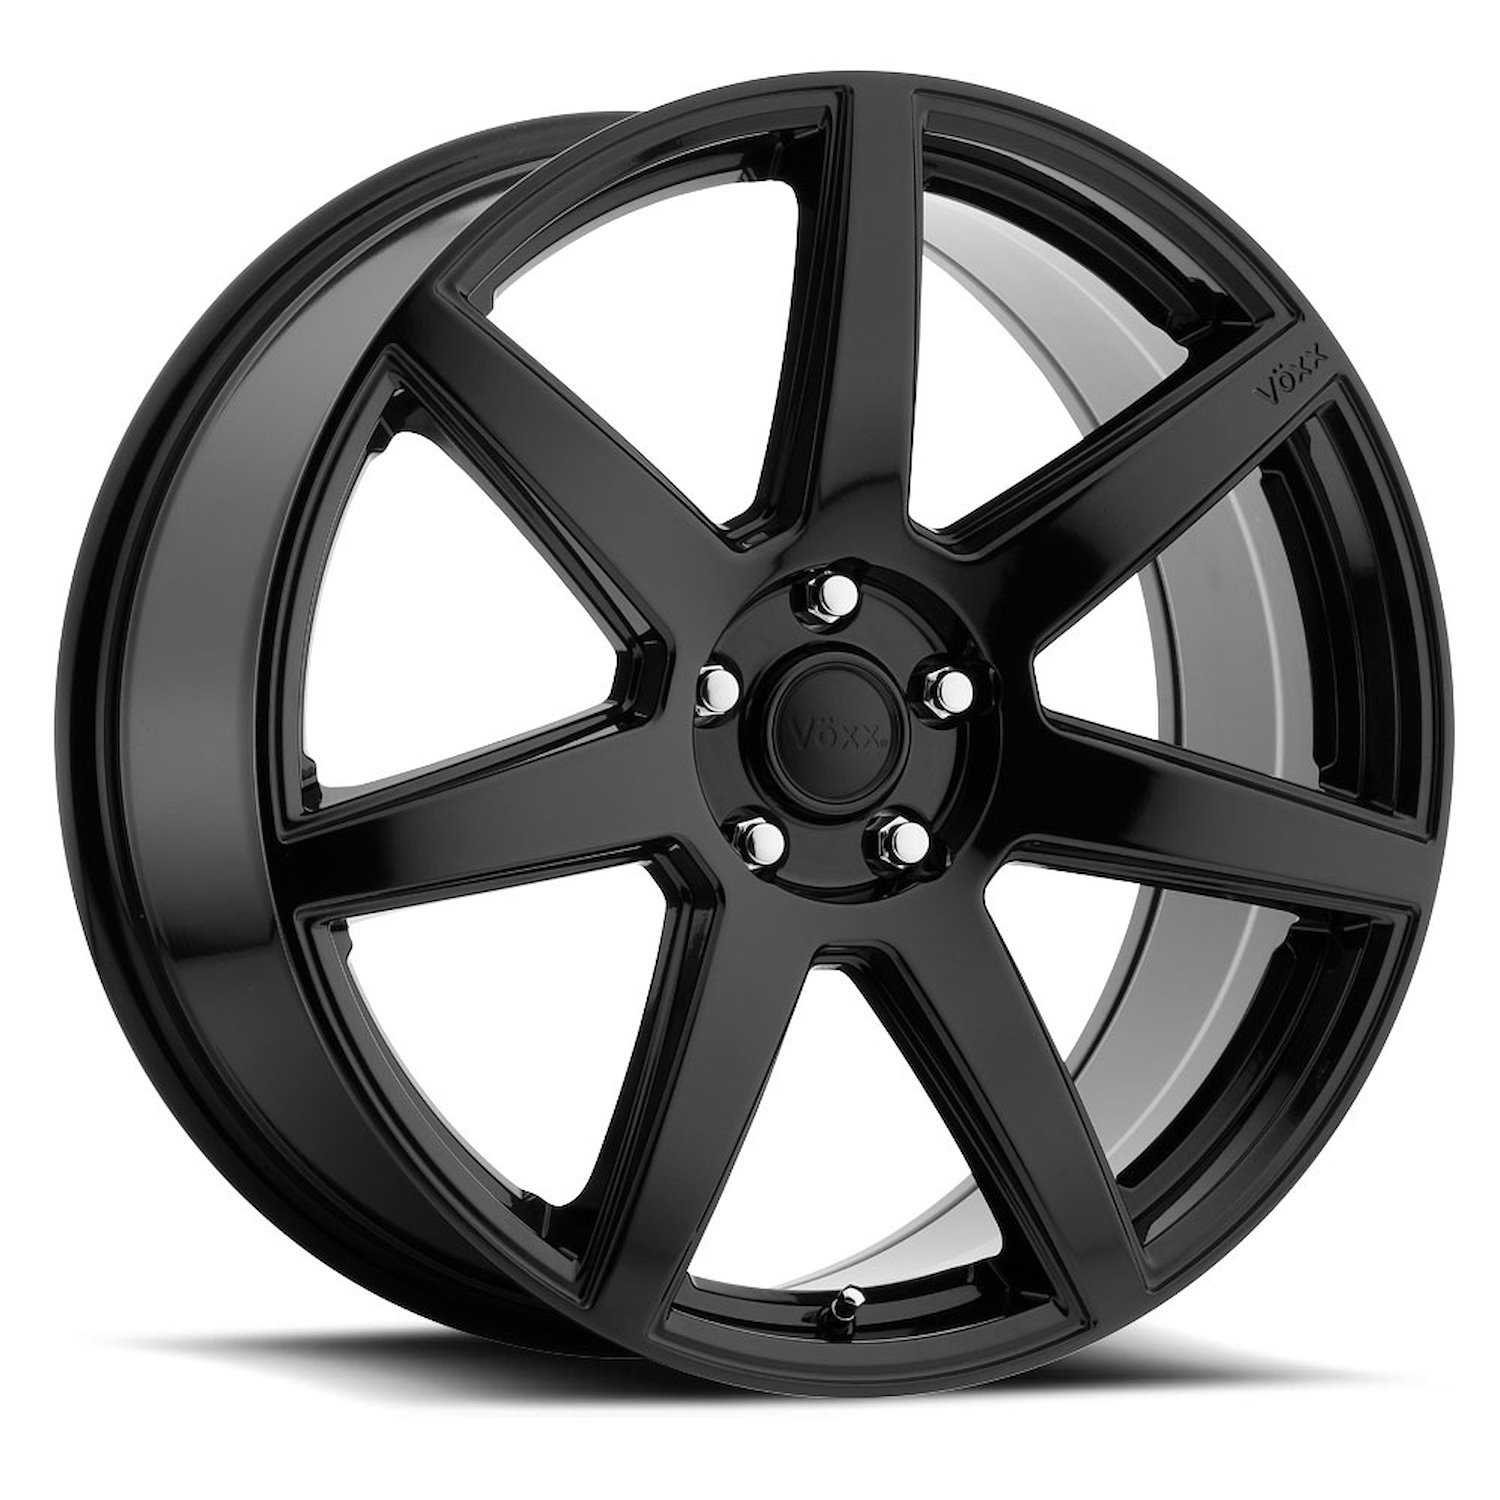 DVO 780-5008-42 GB Divo Wheel [Size: 17" x 8"] Finish: Gloss Black